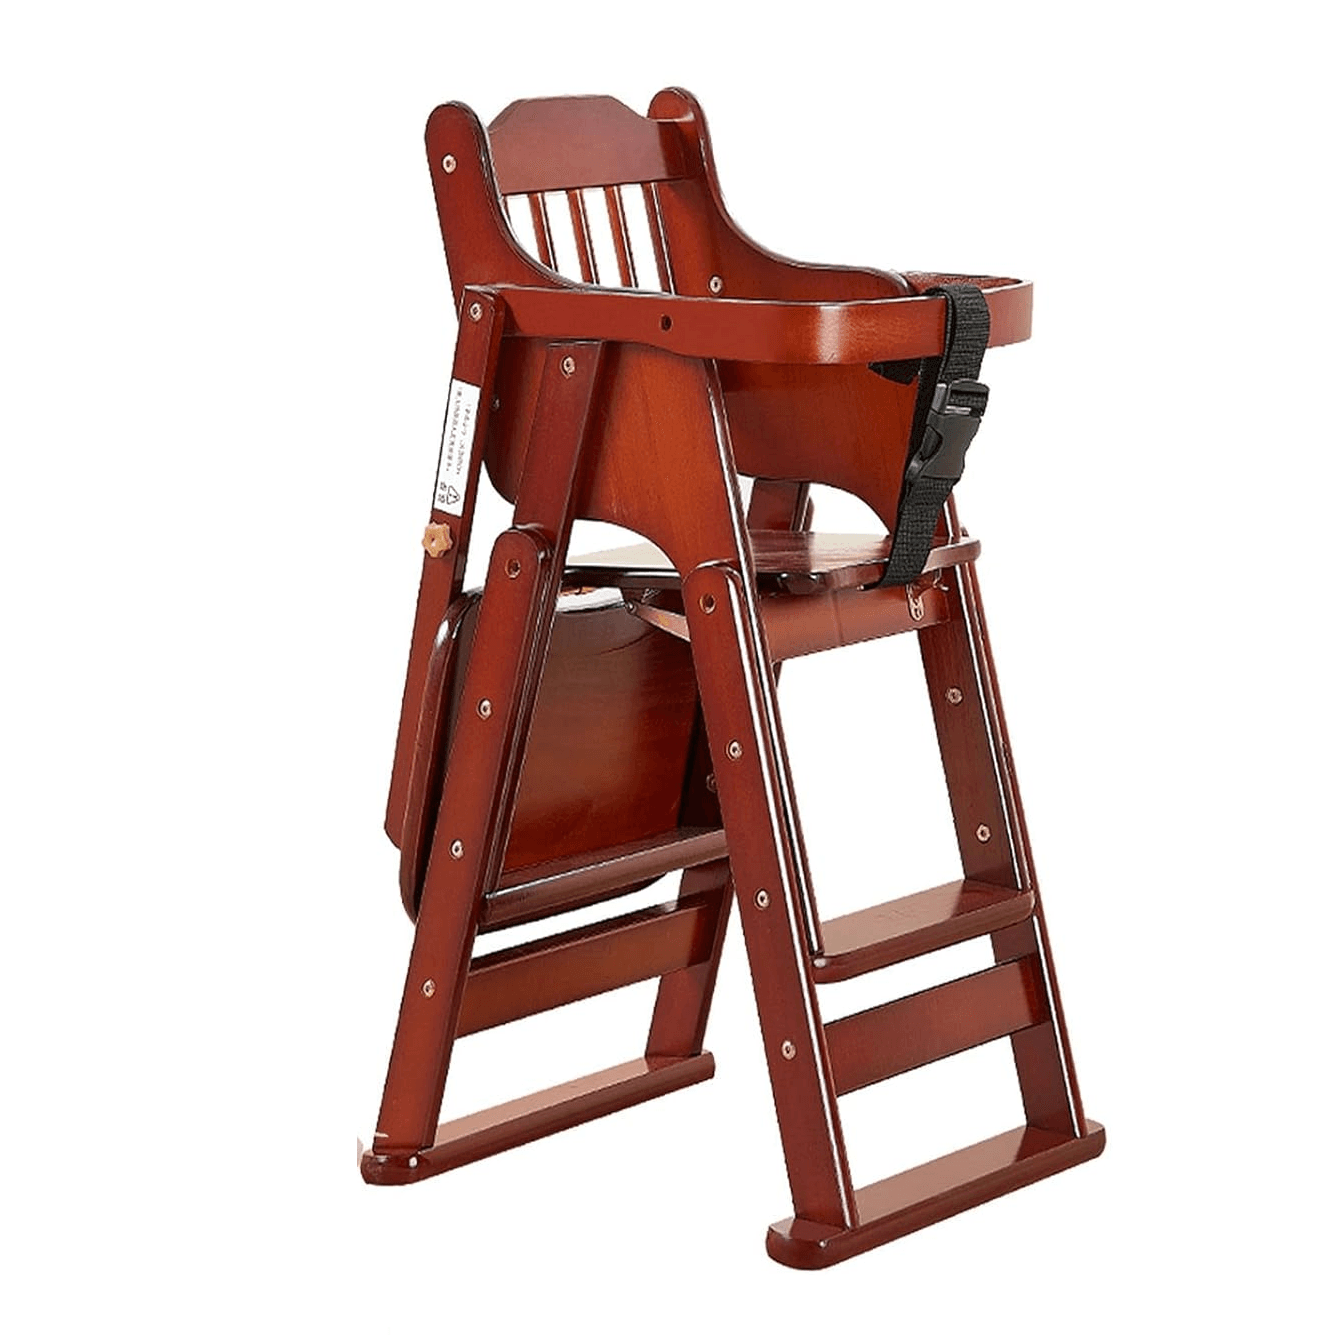 Montessori high chair